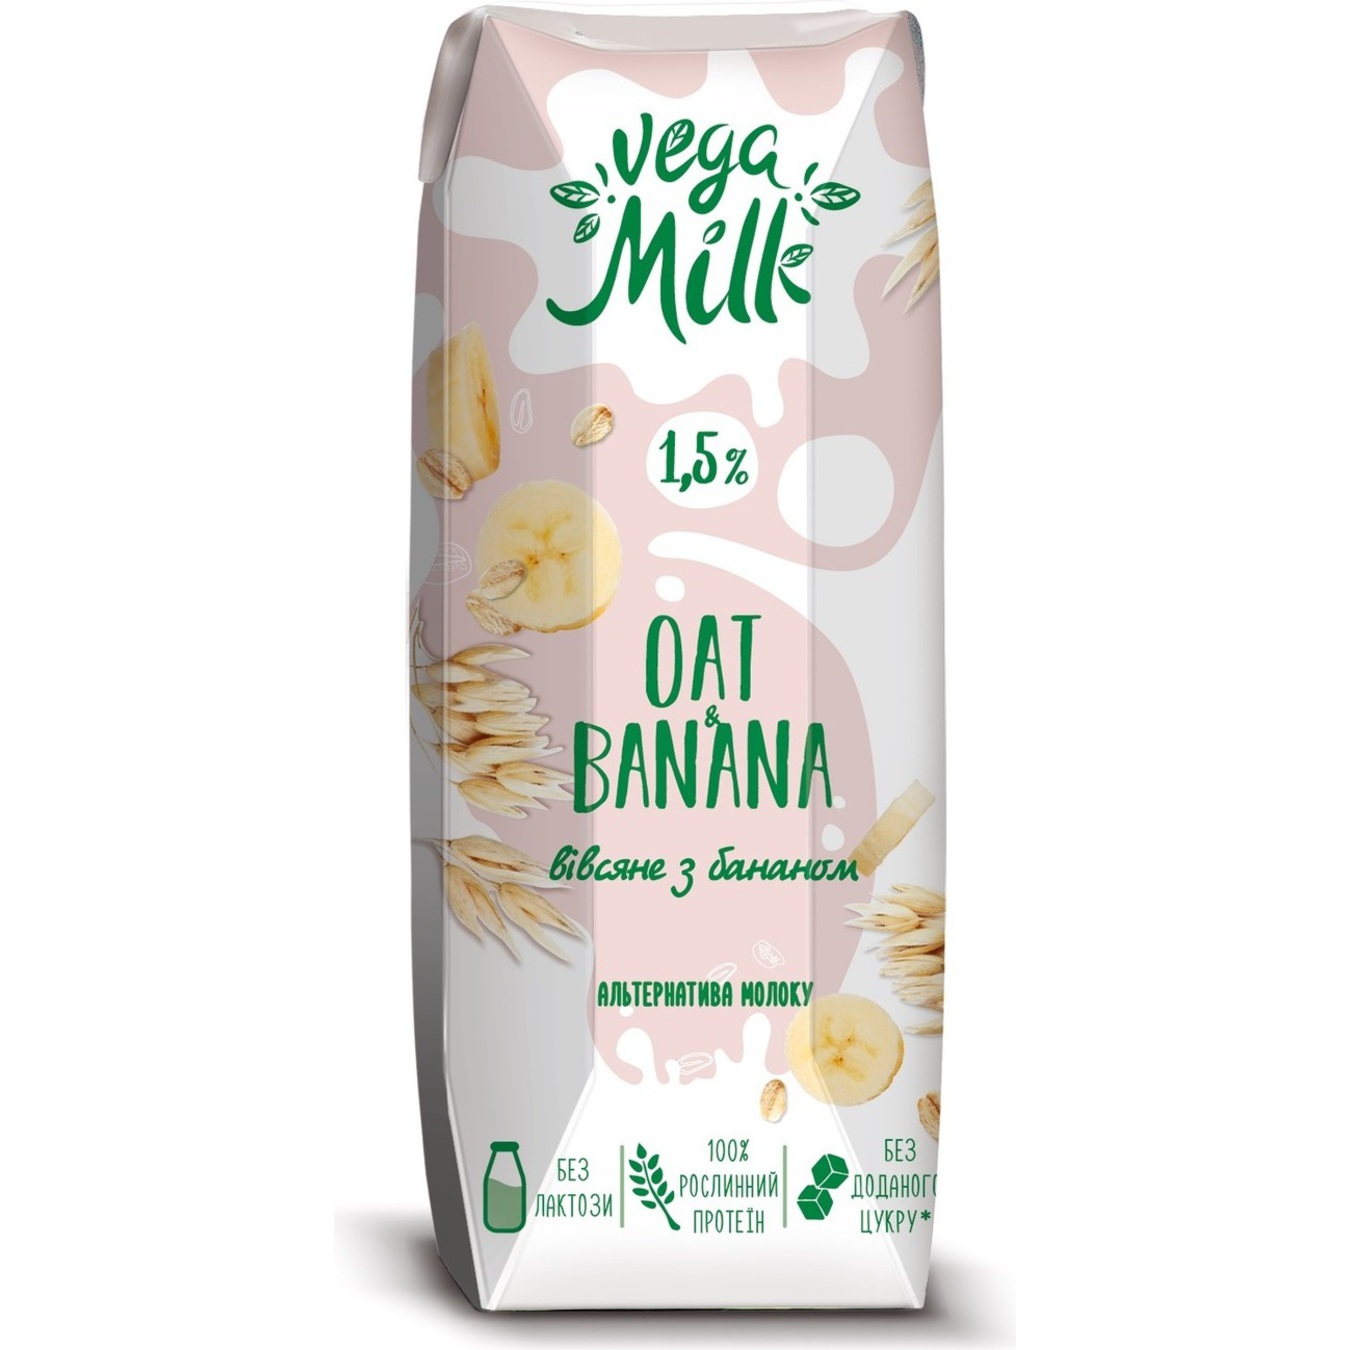 Vega Milk With Banana Ultrapasteurized Oat Drink 1.5% 250ml